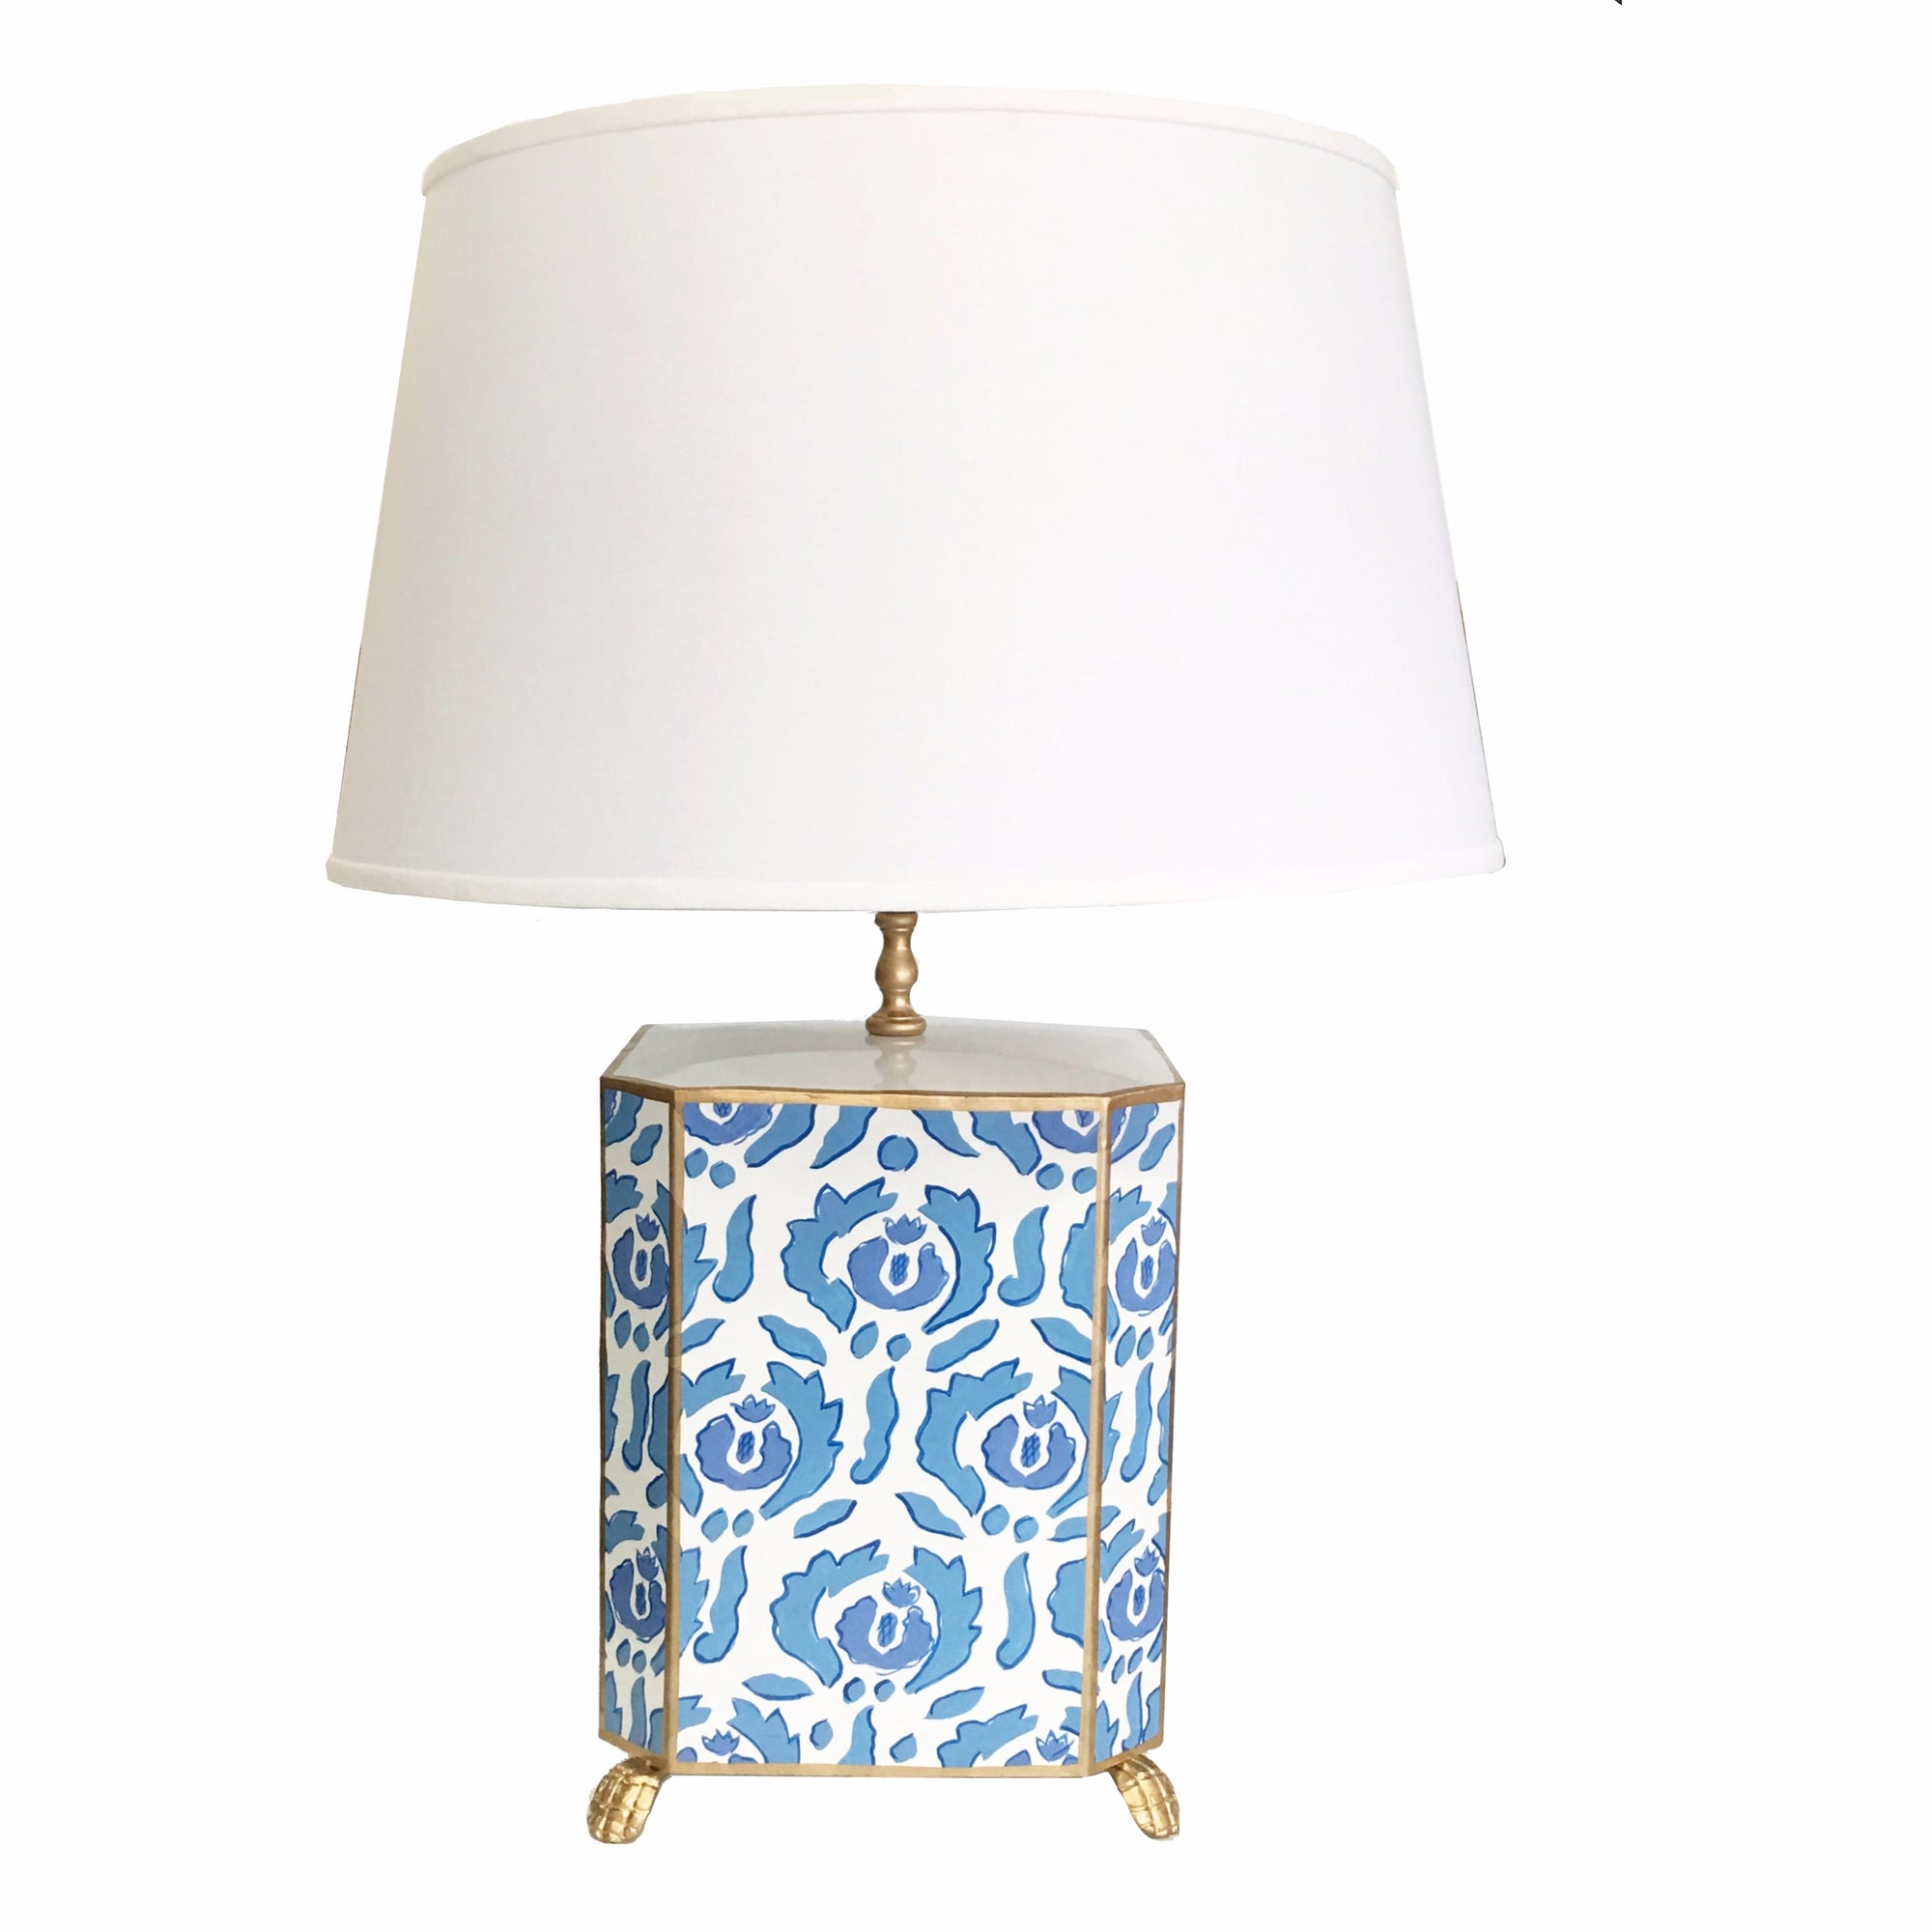 Dana Gibson Beaufont Lamp in Blue